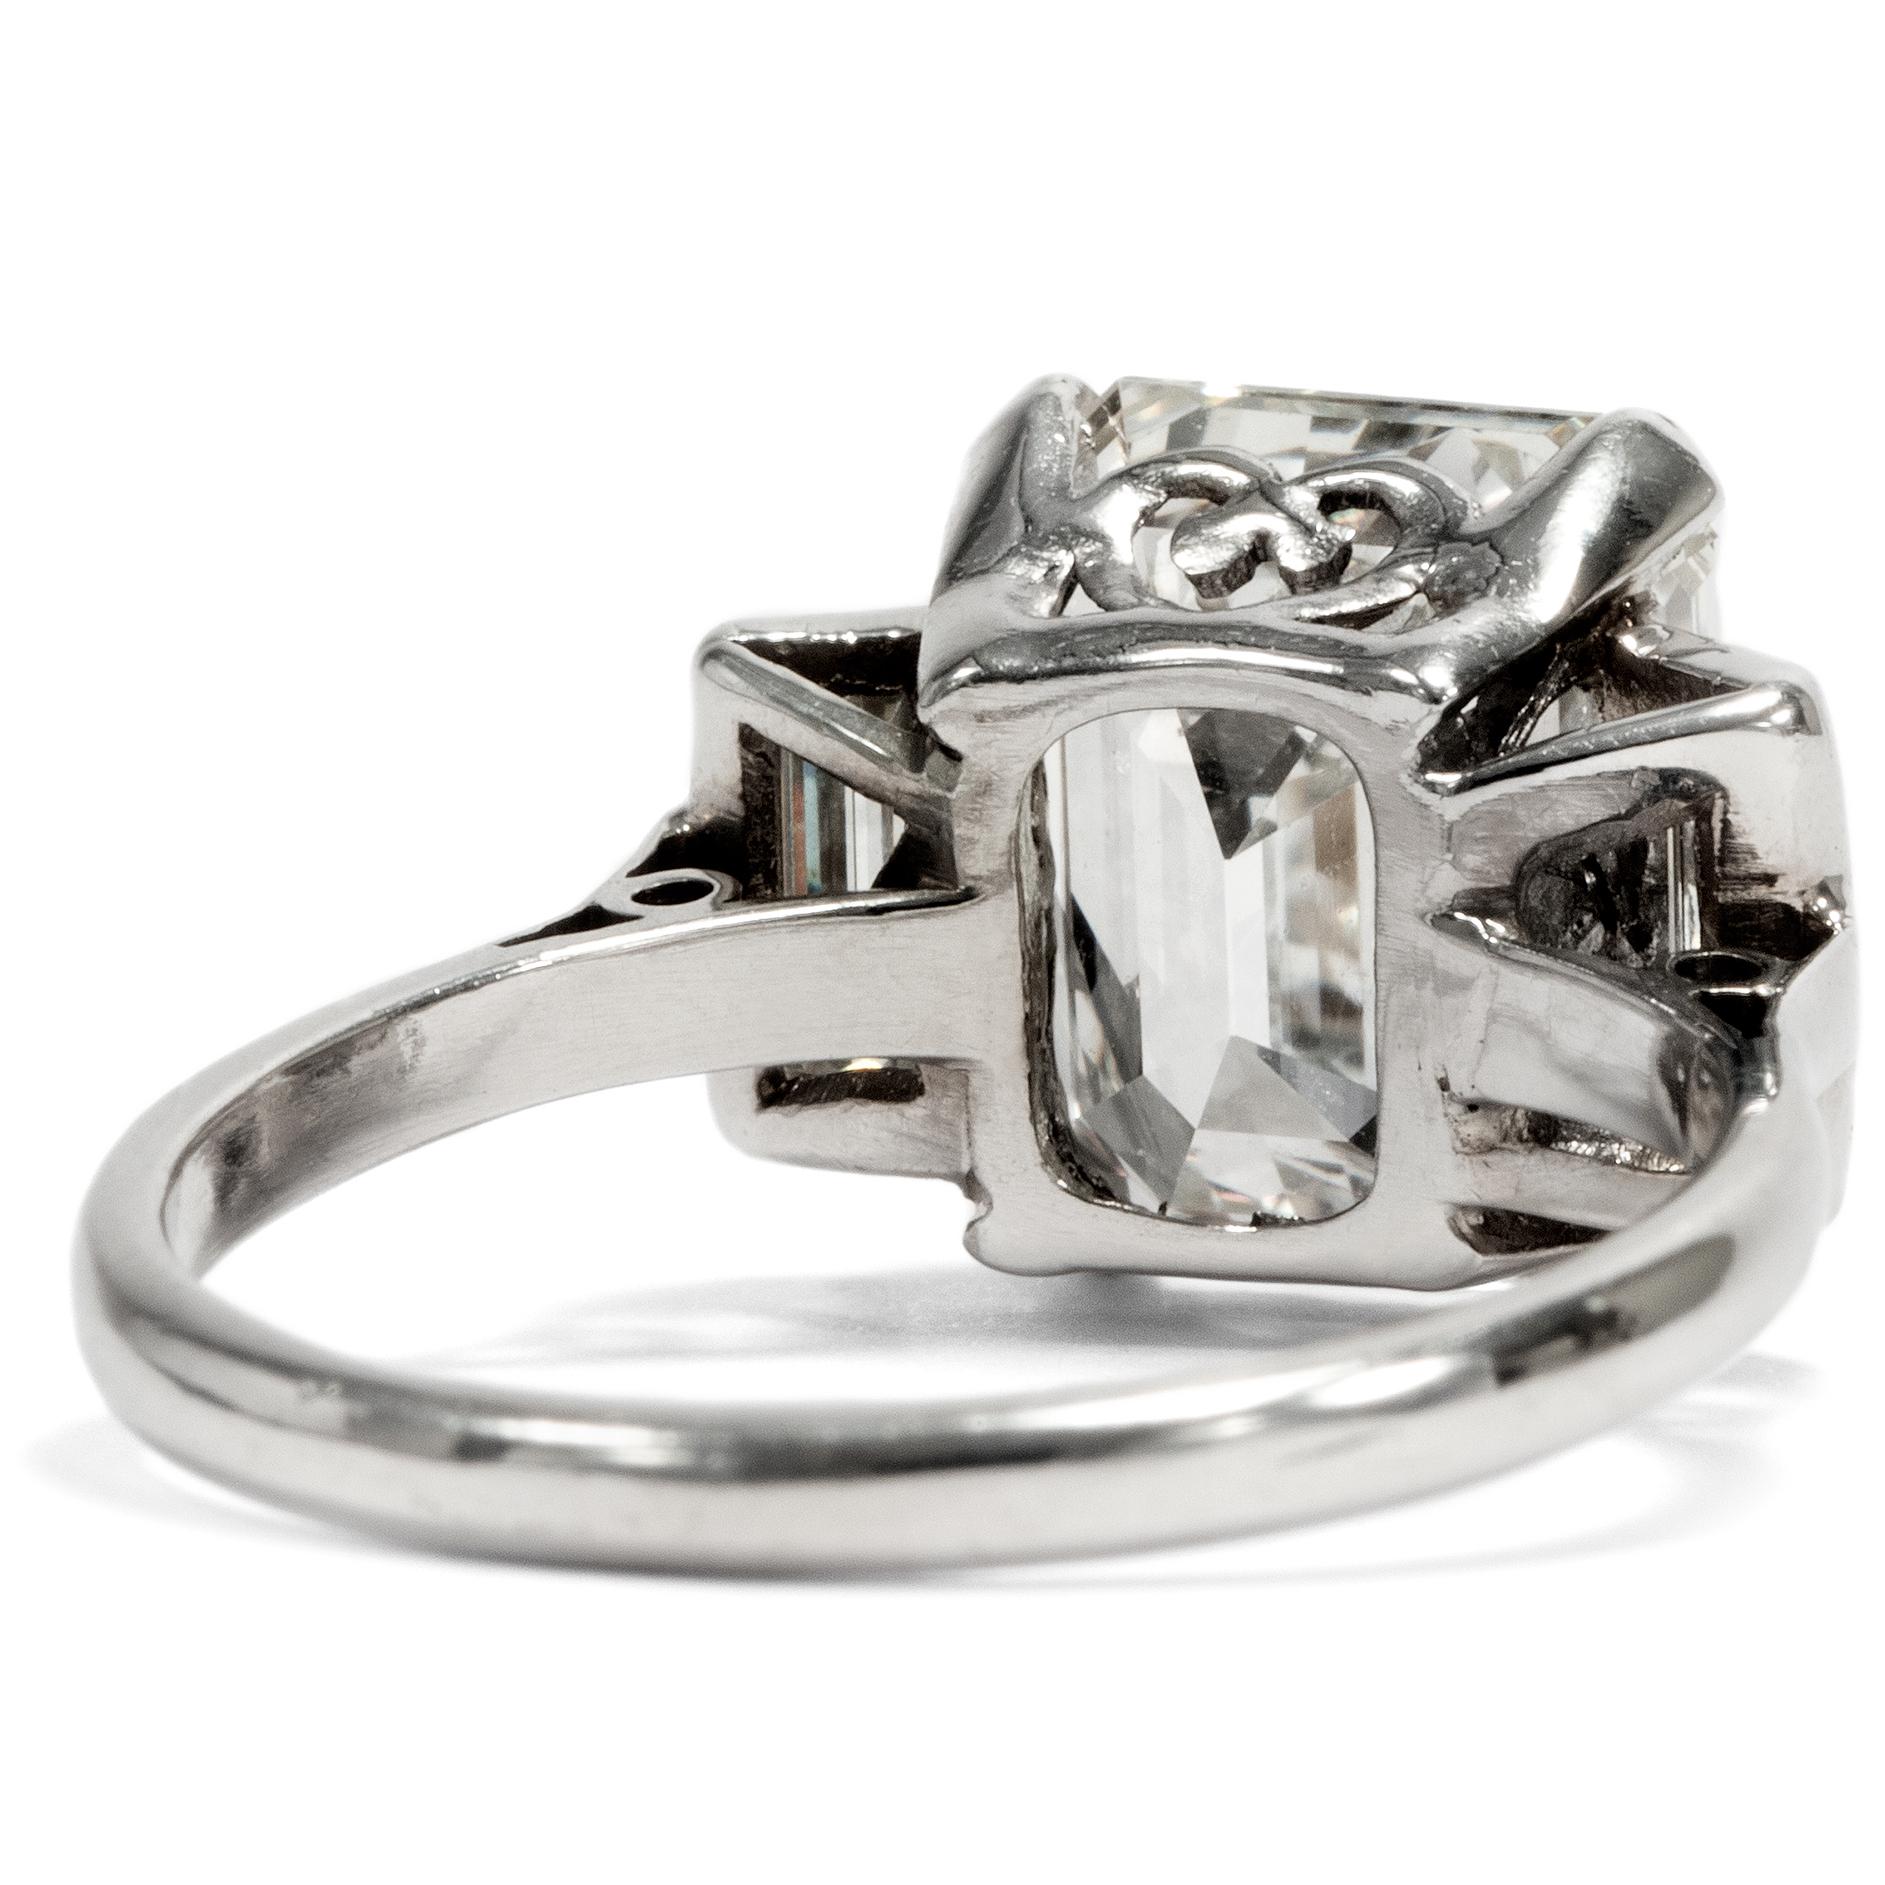 Certified 5.012 Carat Emerald Cut Diamond Art Deco circa 1935 Engagement Ring 1